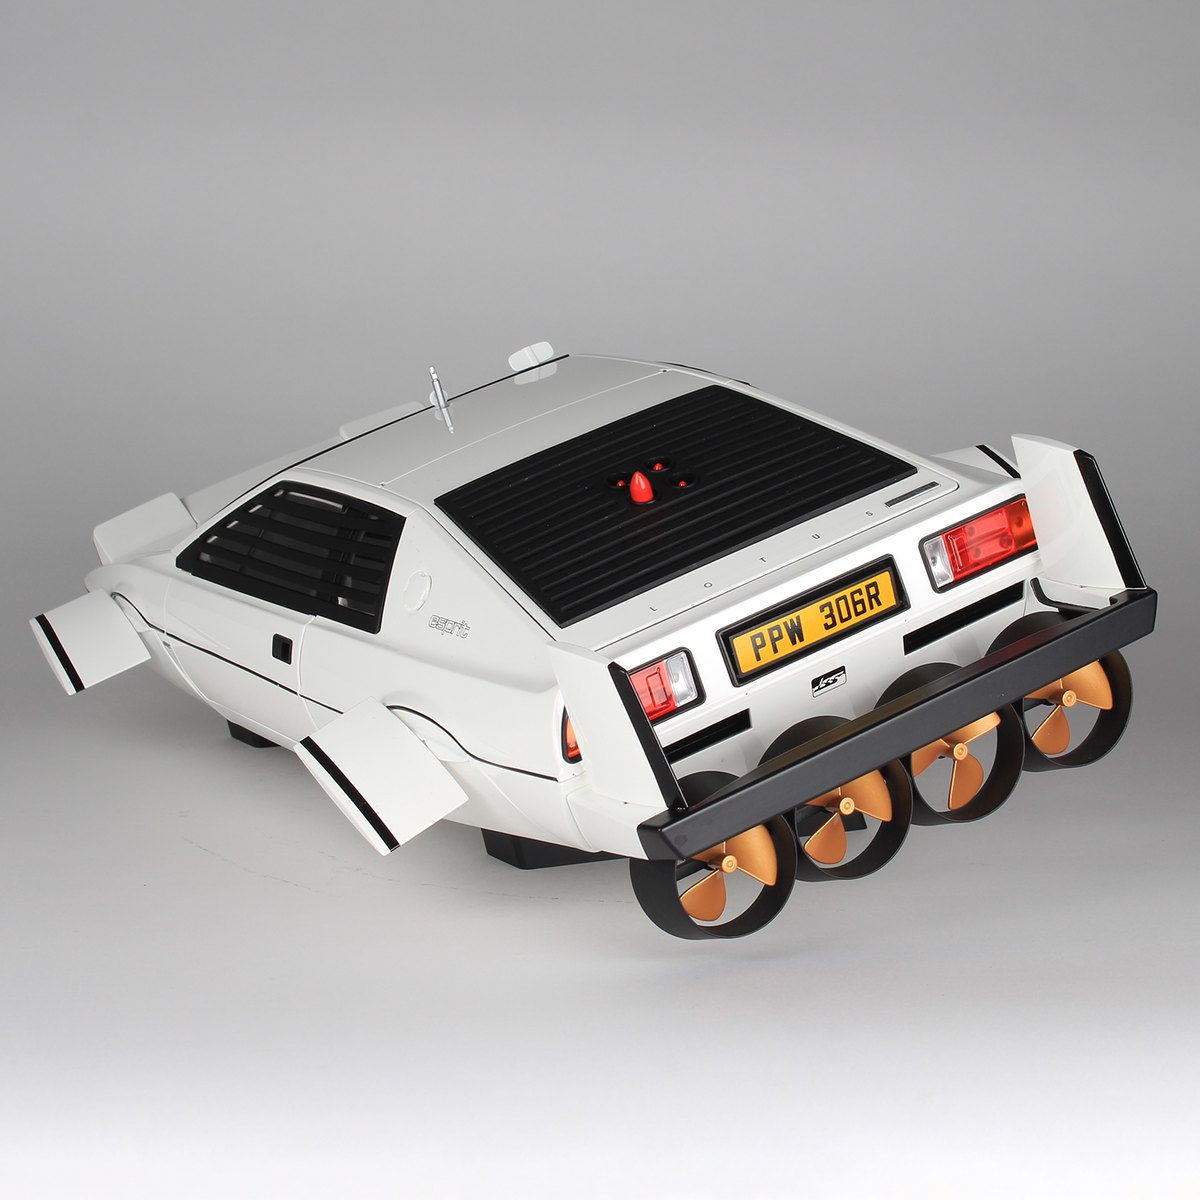 James Bond The Spy Who Loved Me Lotus Esprit Model Car Kit - Subscription - By Agora Models